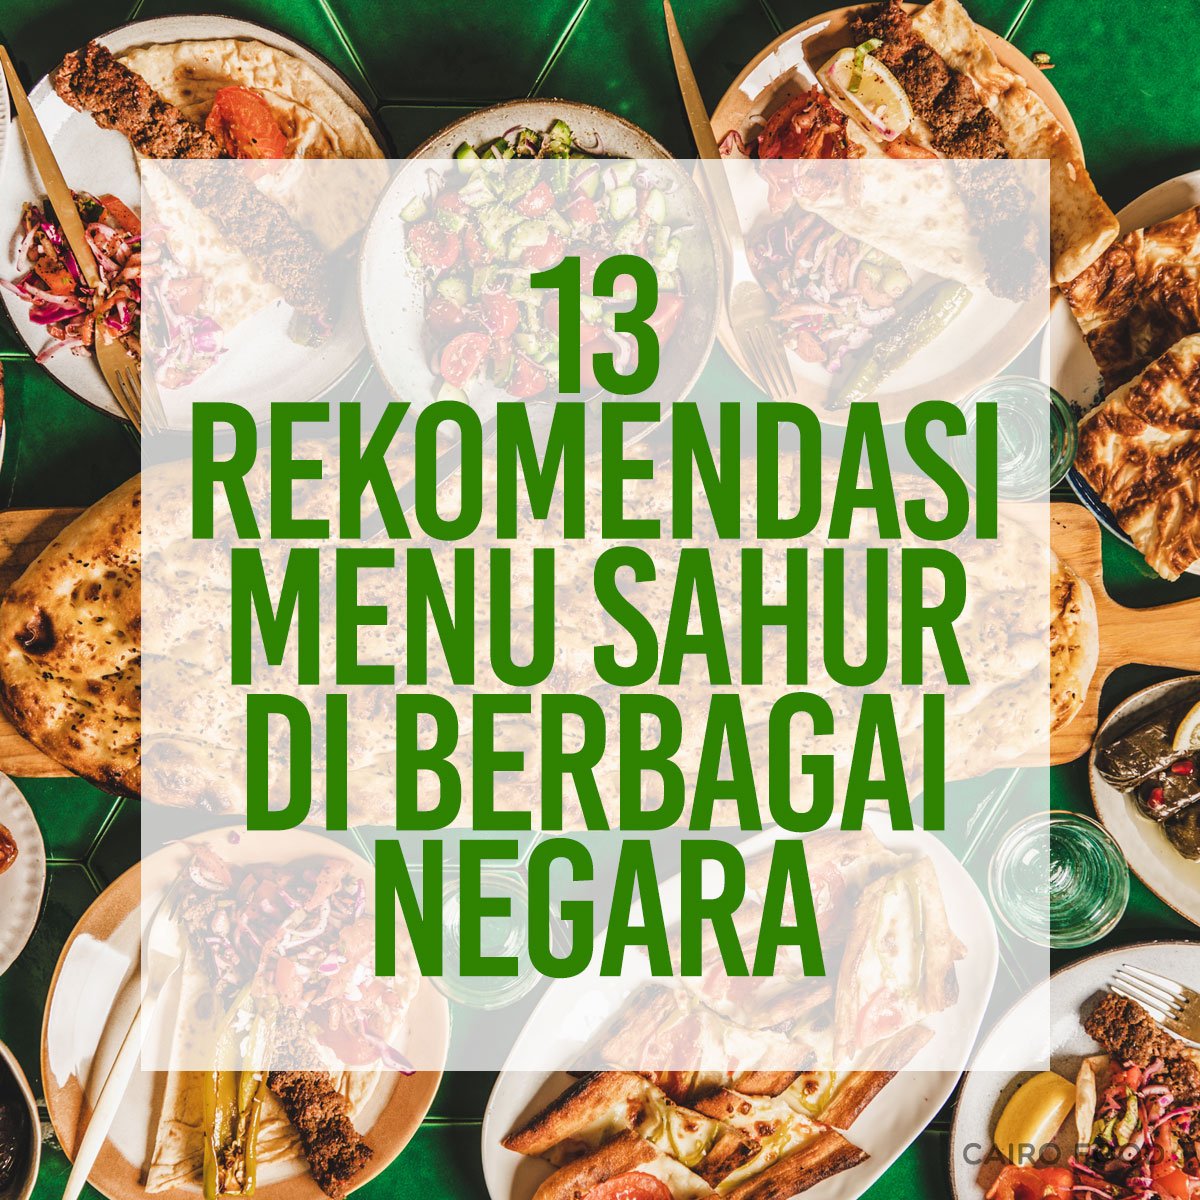 13 rekomendasi menu sahur di berbagai negara